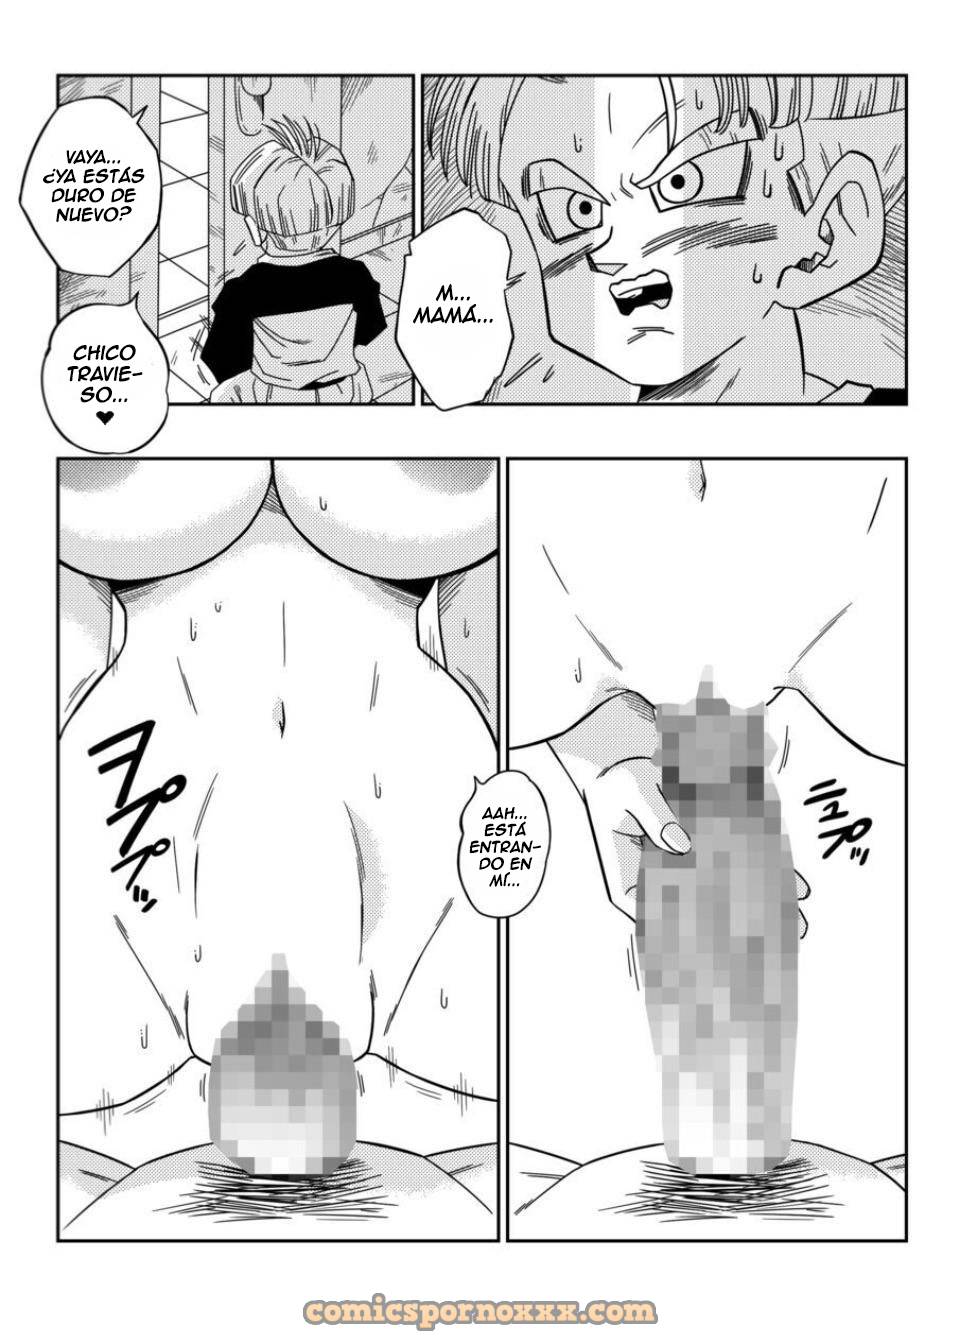 Lots of Sex in this Future - 11 - Comics Porno - Hentai Manga - Cartoon XXX